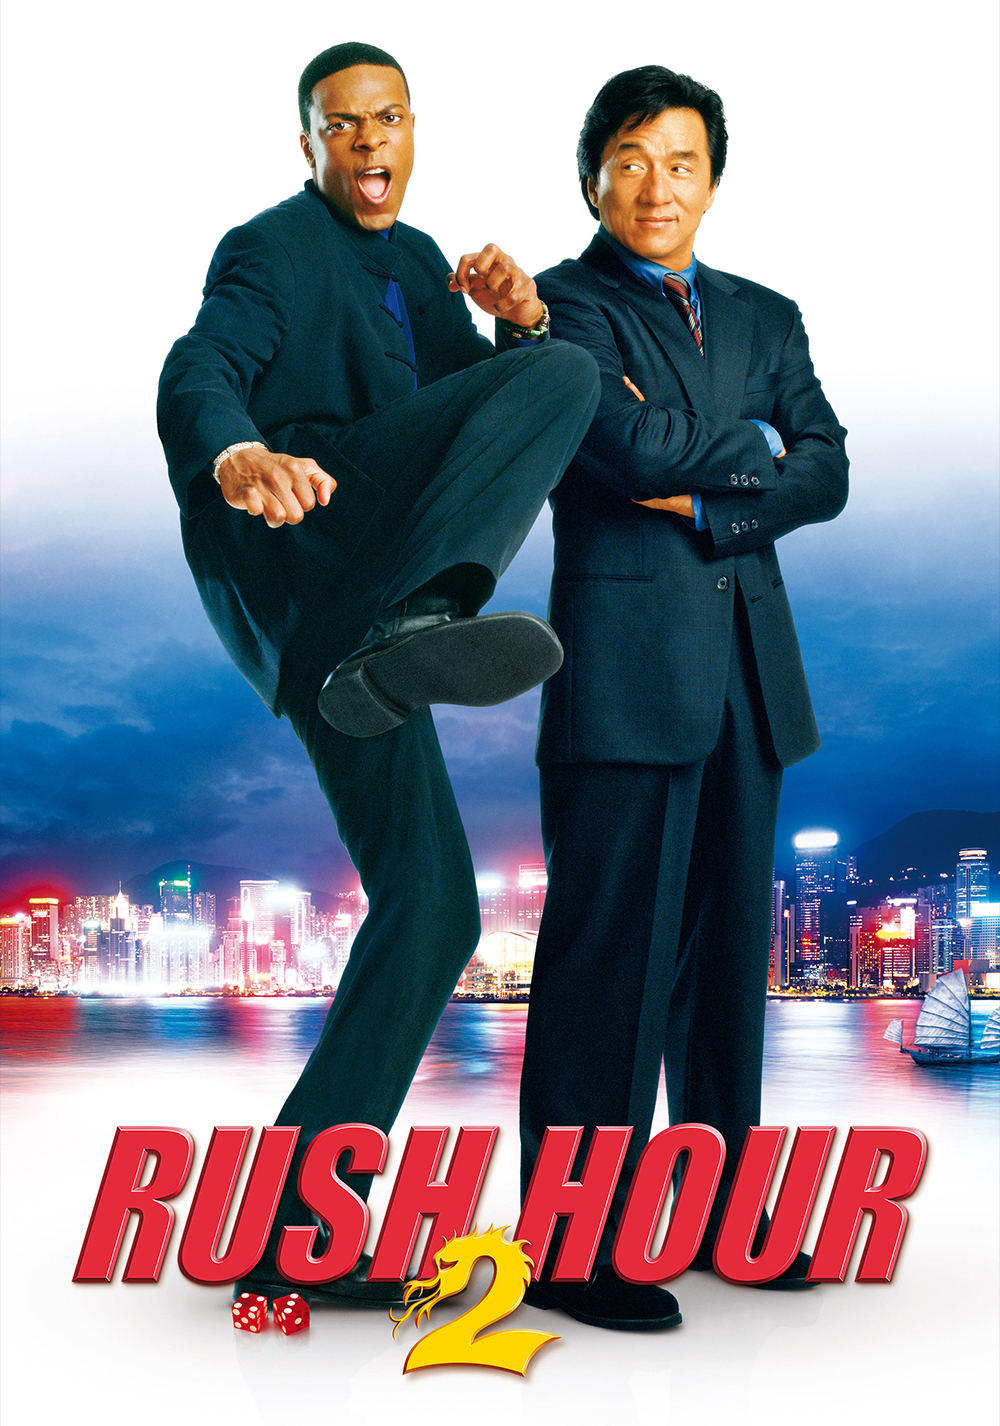 Stiahni si HD Filmy Krizovatka smrti 2 / Rush Hour 2 (2001)(CZ/EN)[720p] = CSFD 68%